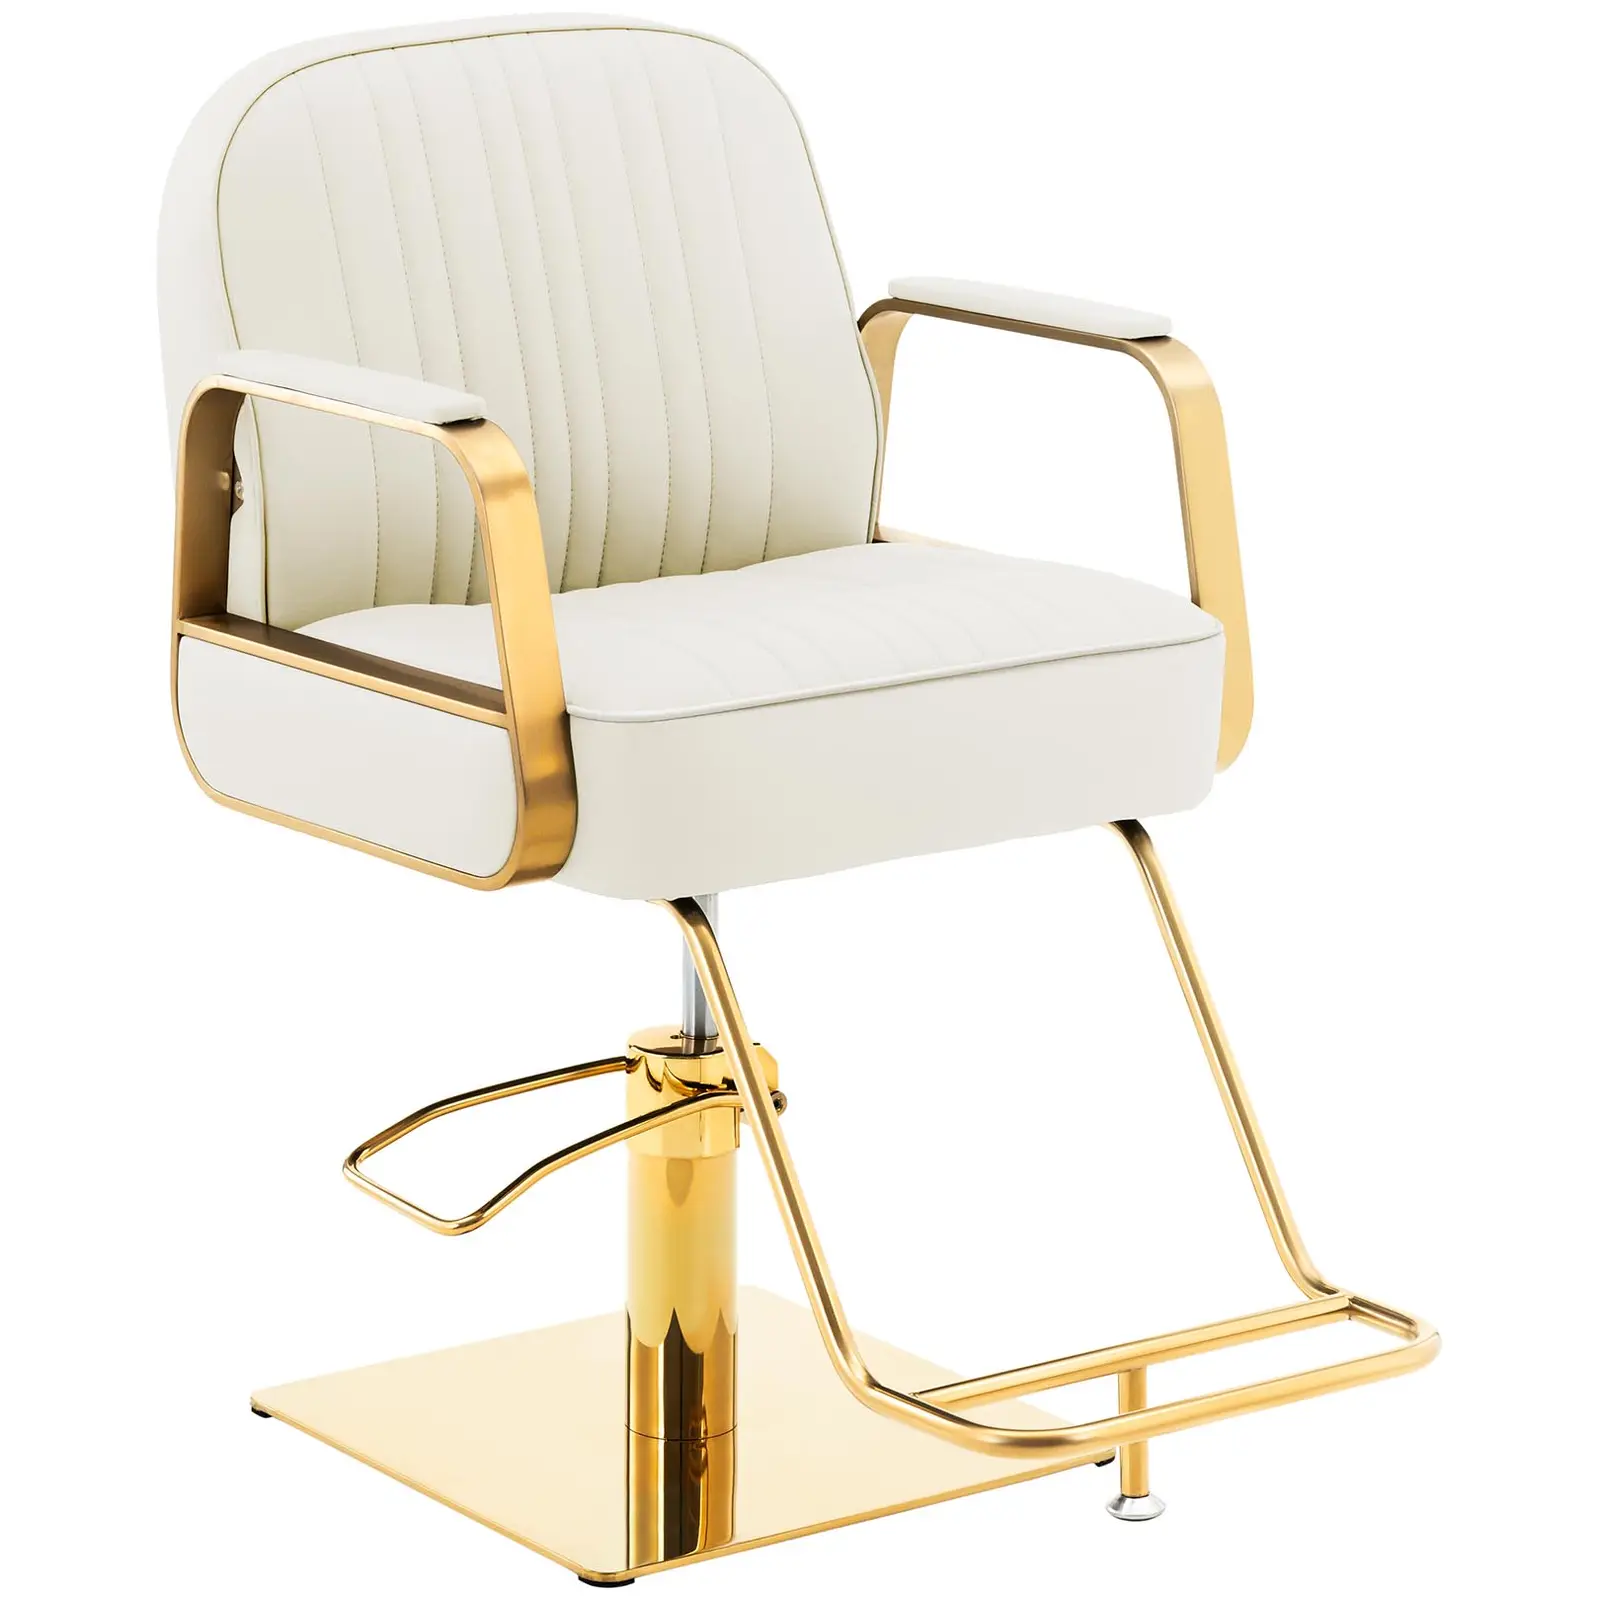 Salonska stolica s osloncem za noge - 920 - 1070 mm - 200 kg - krem / zlatna